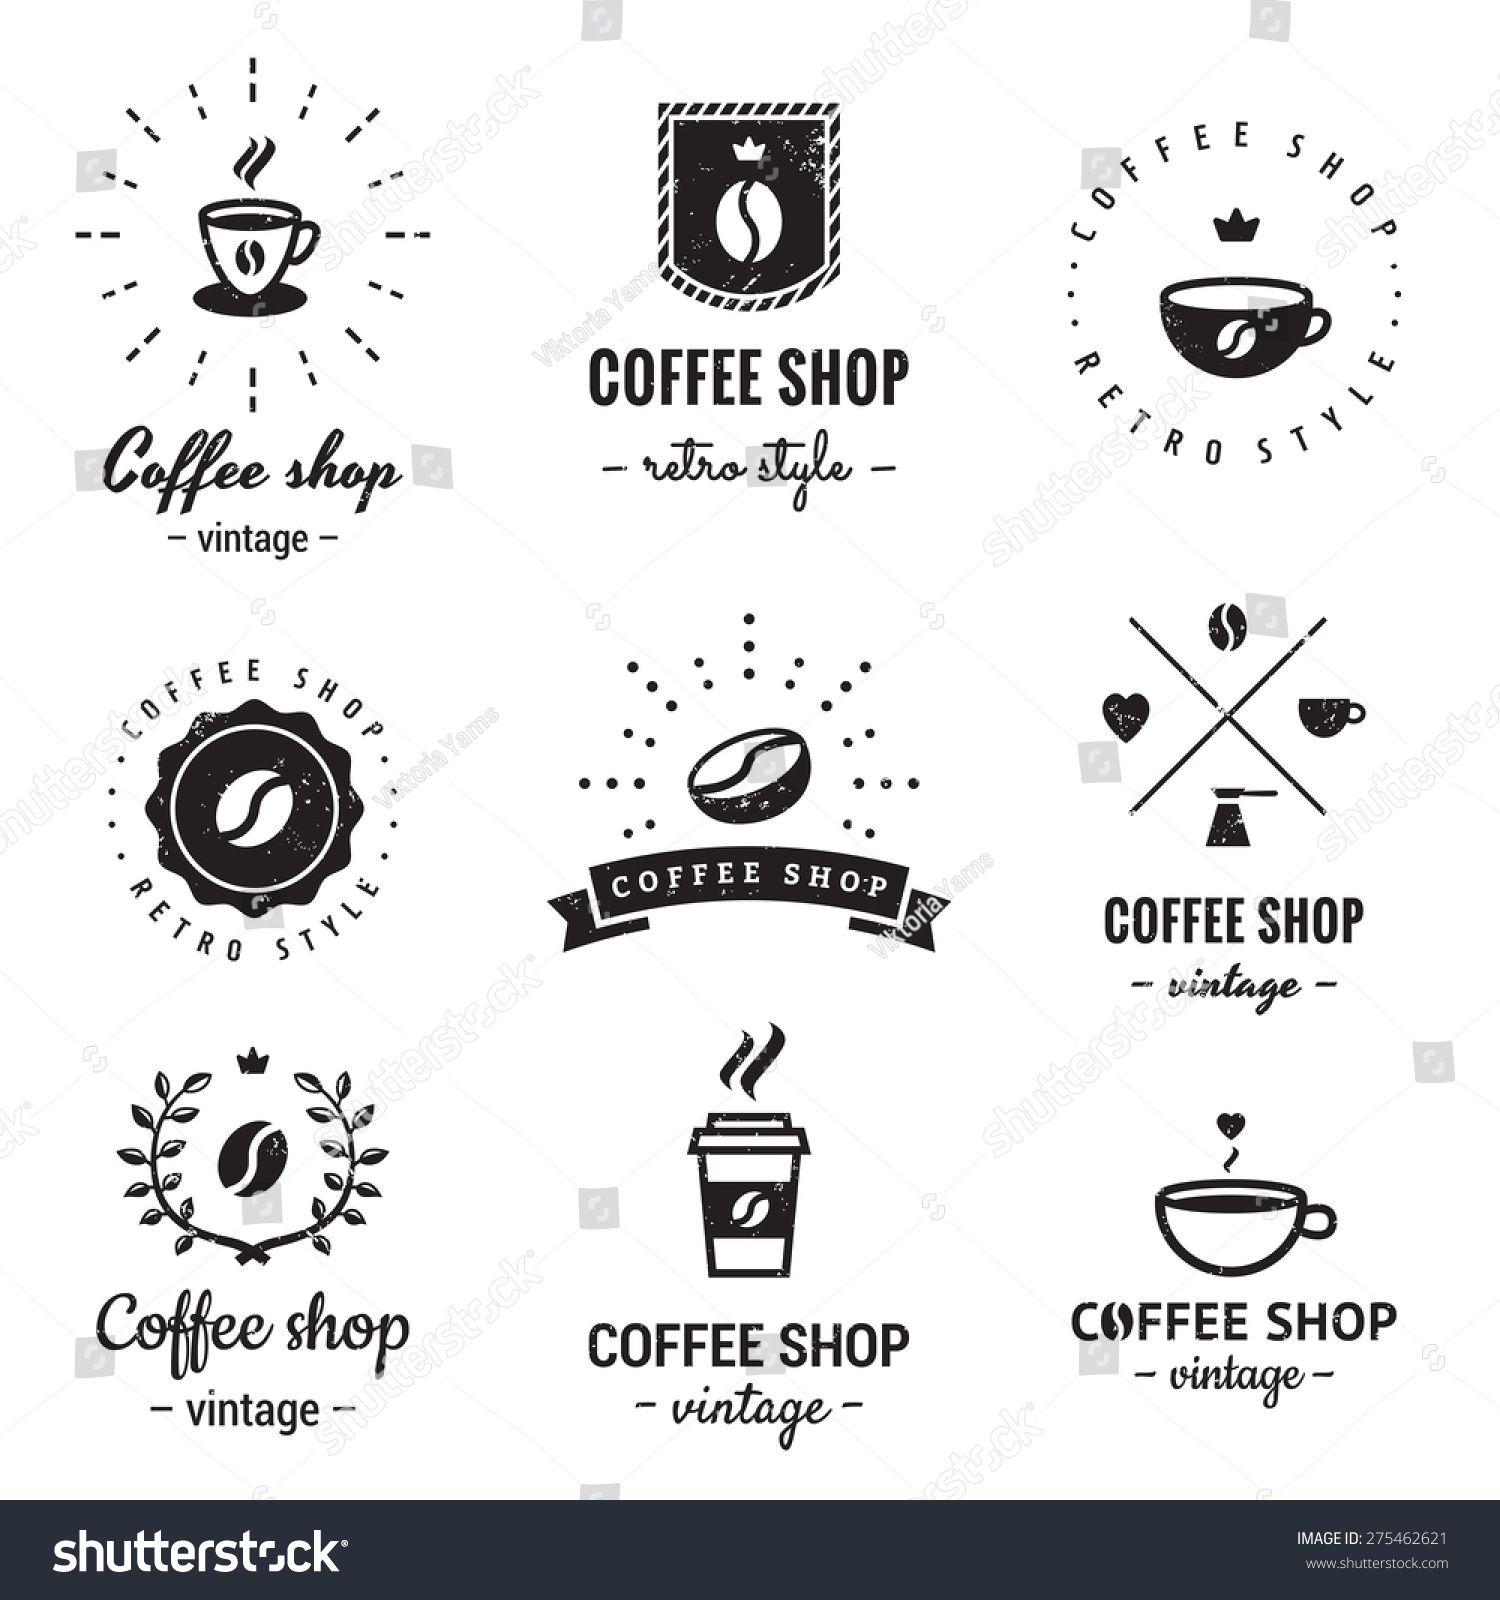 Vintage Coffee Shop Logo - Coffee shop logo vintage vector set. Hipster and retro style ...